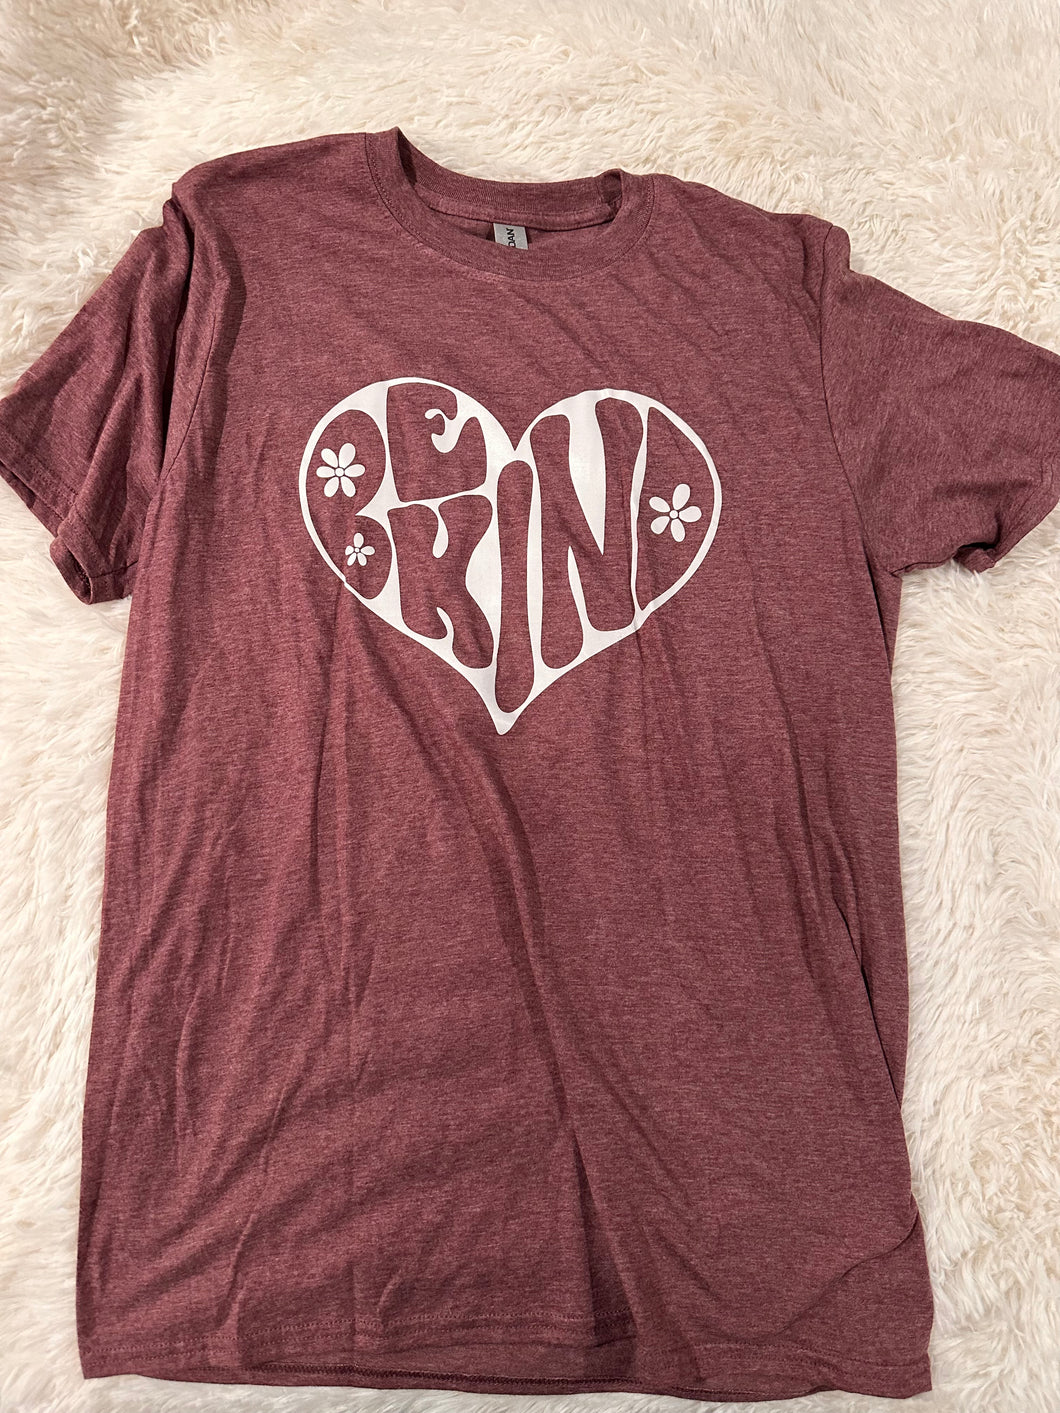 Be Kind T-Shirt Maroon - Medium